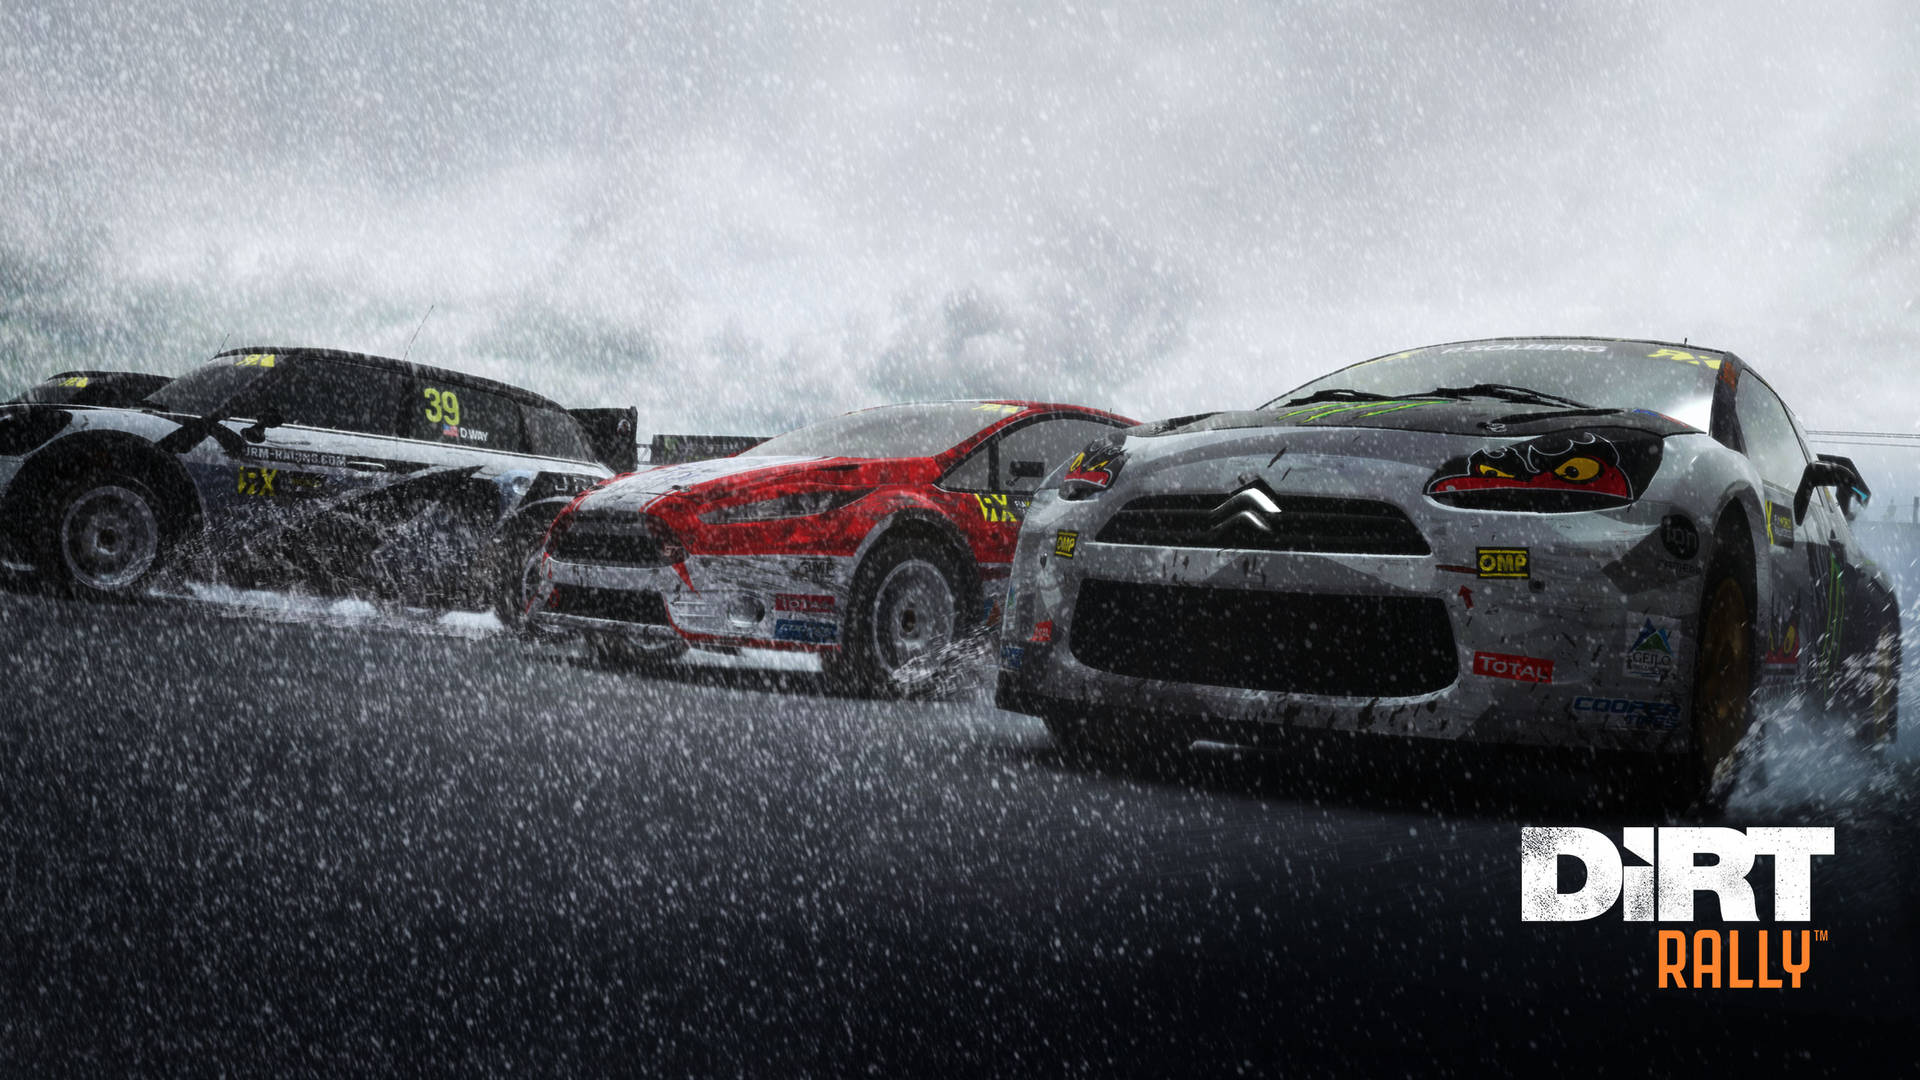 Dirt Rally Cars Racing Under Rain Wallpaper